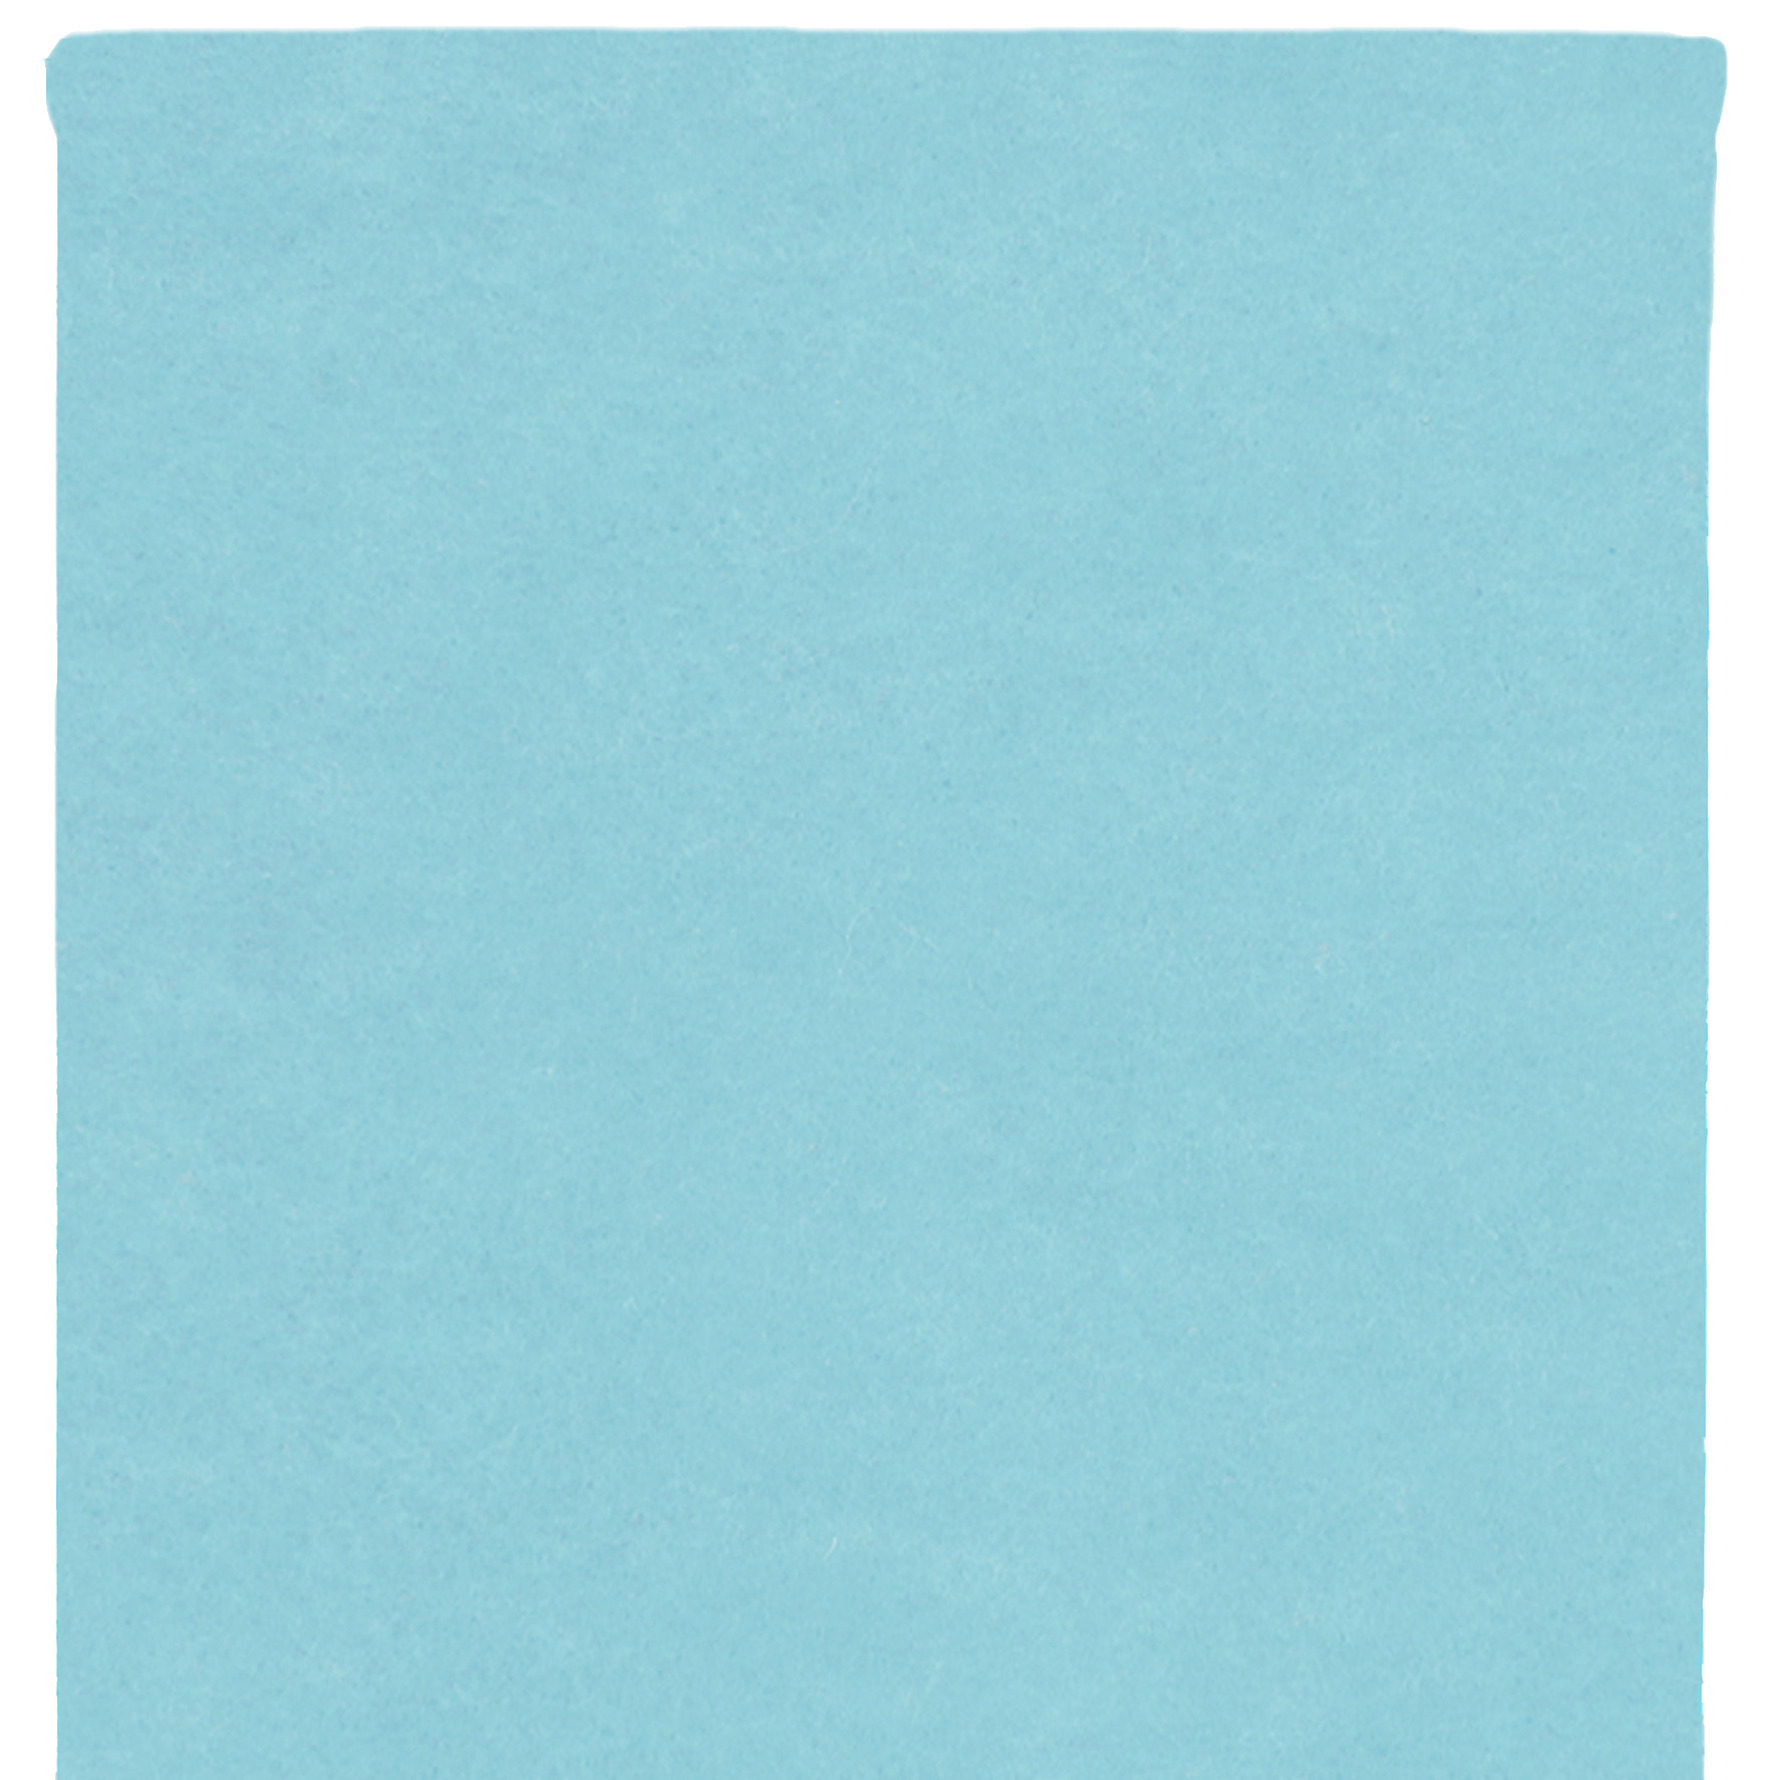 Feest tafelkleed op rol lichtblauw 120 cm x 10 m non woven polyester